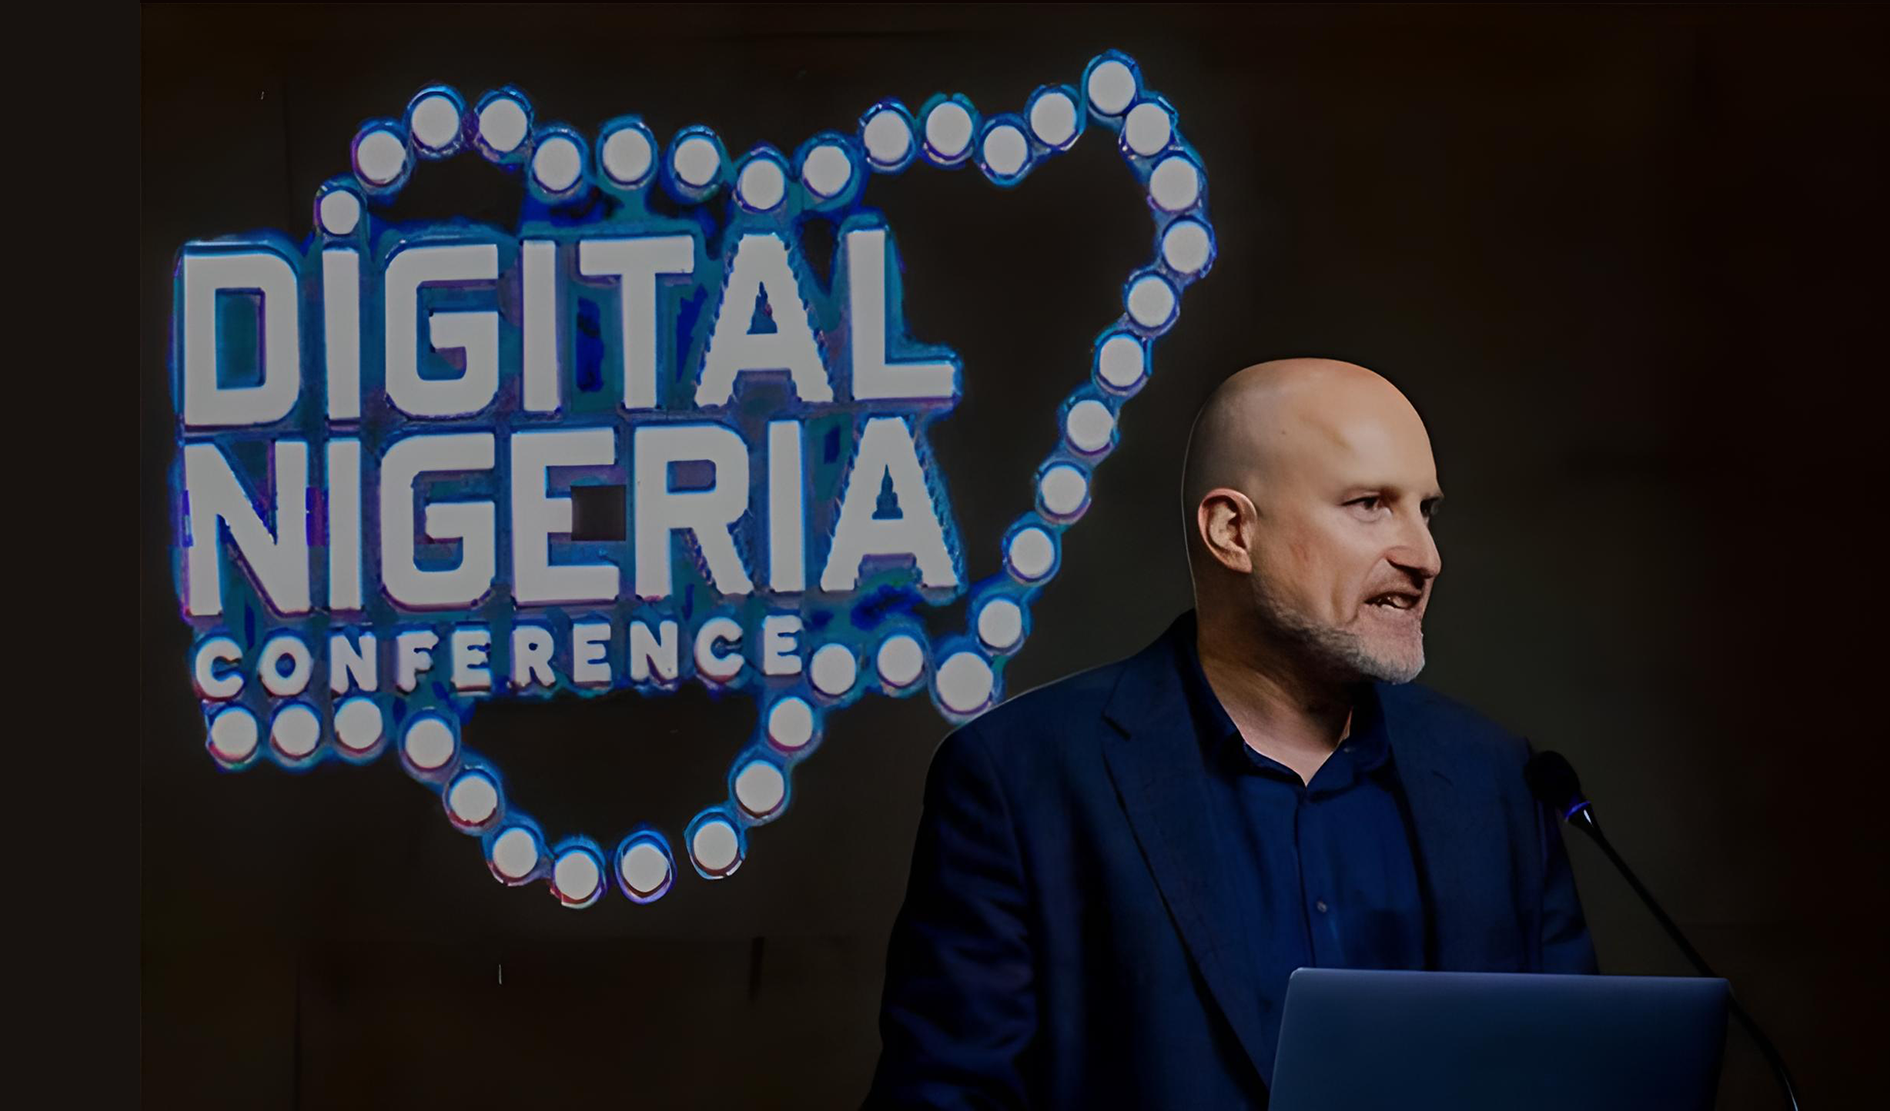 Digital Nigeria International Conference